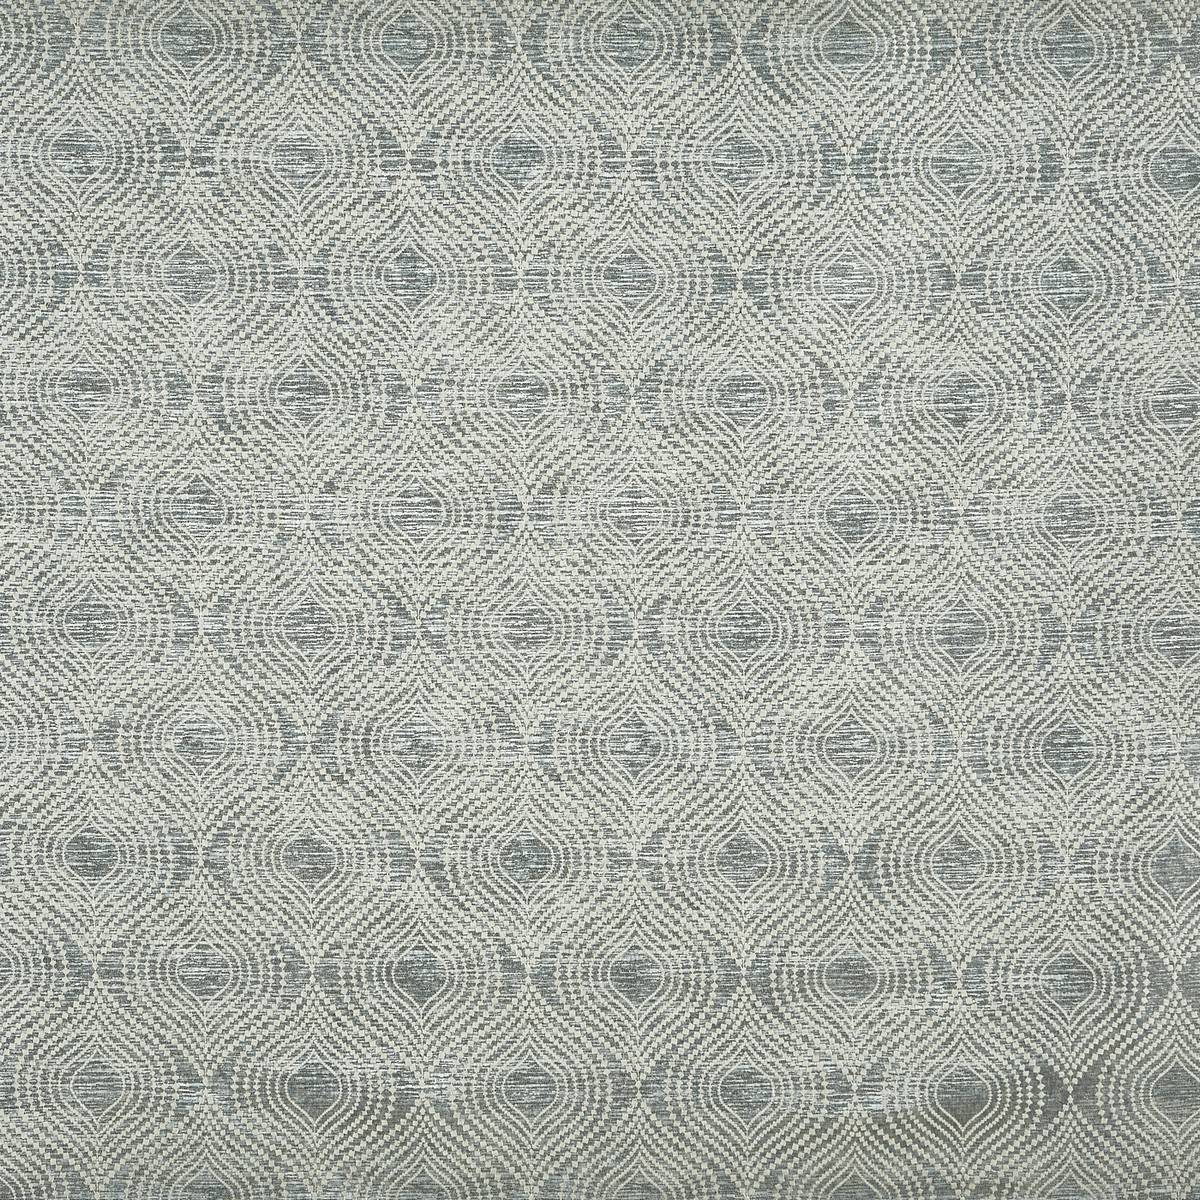 Radiance Otter Fabric by Prestigious Textiles